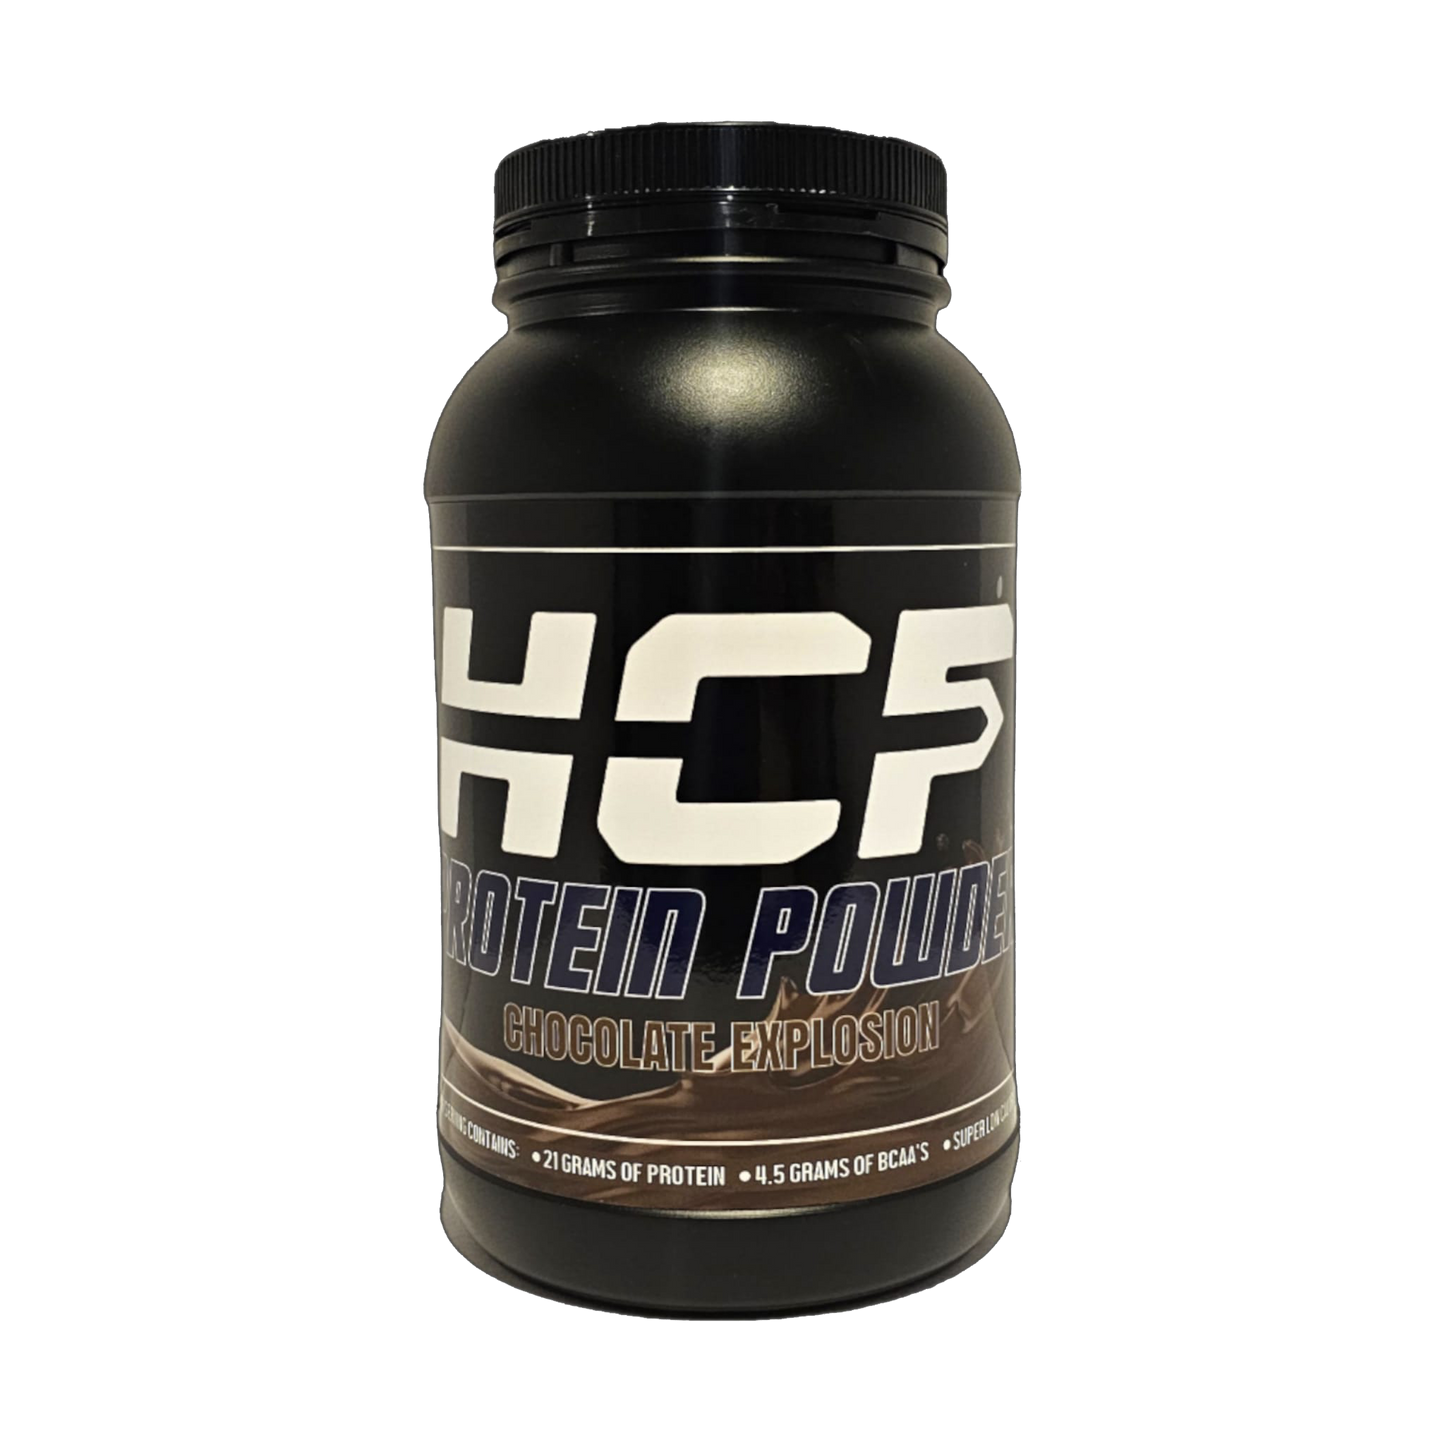 HCF Protein Powder - Chocolate Explosion